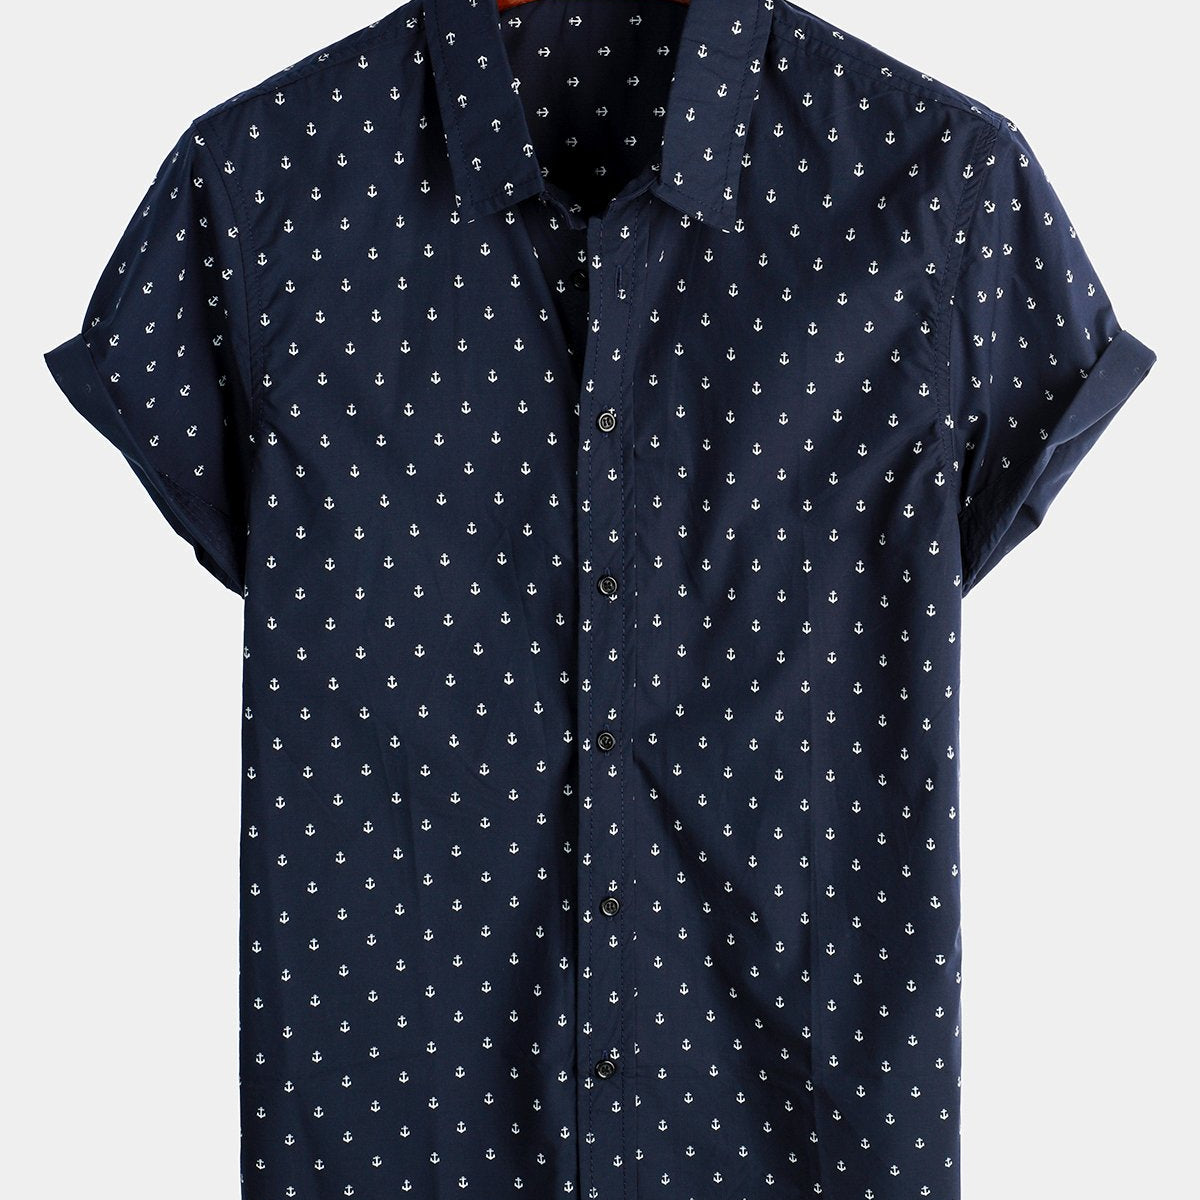 Men's Navy Blue Casual Short Sleeve Print Shirt